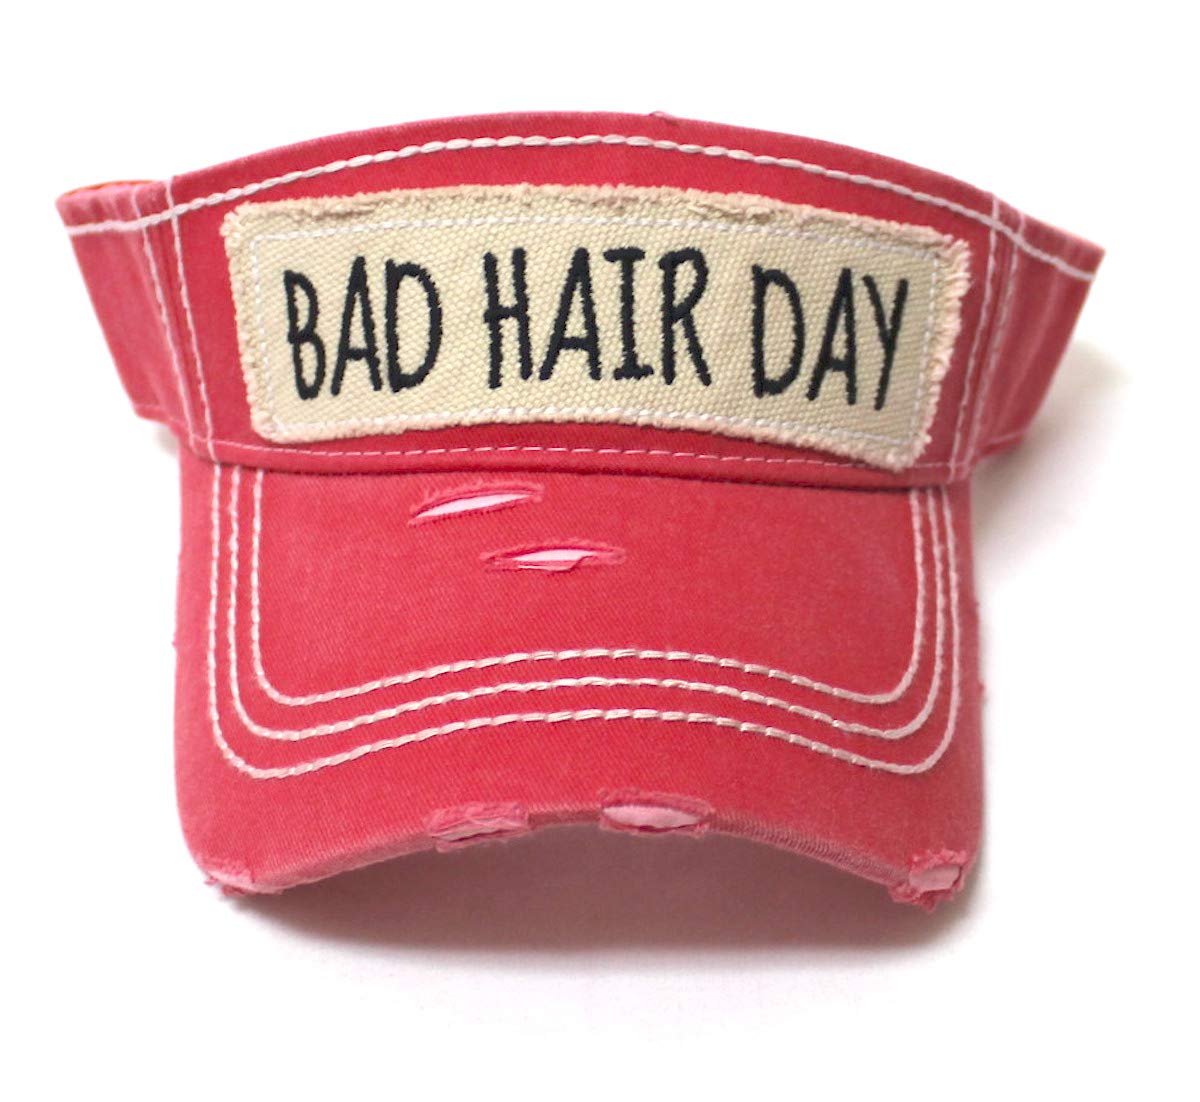 CAPS 'N VINTAGE Womens Baseball Cap Bad Hair Day High Ponytail Bun Half Visor Adjustable Athletic Hat, Rose - Caps 'N Vintage 